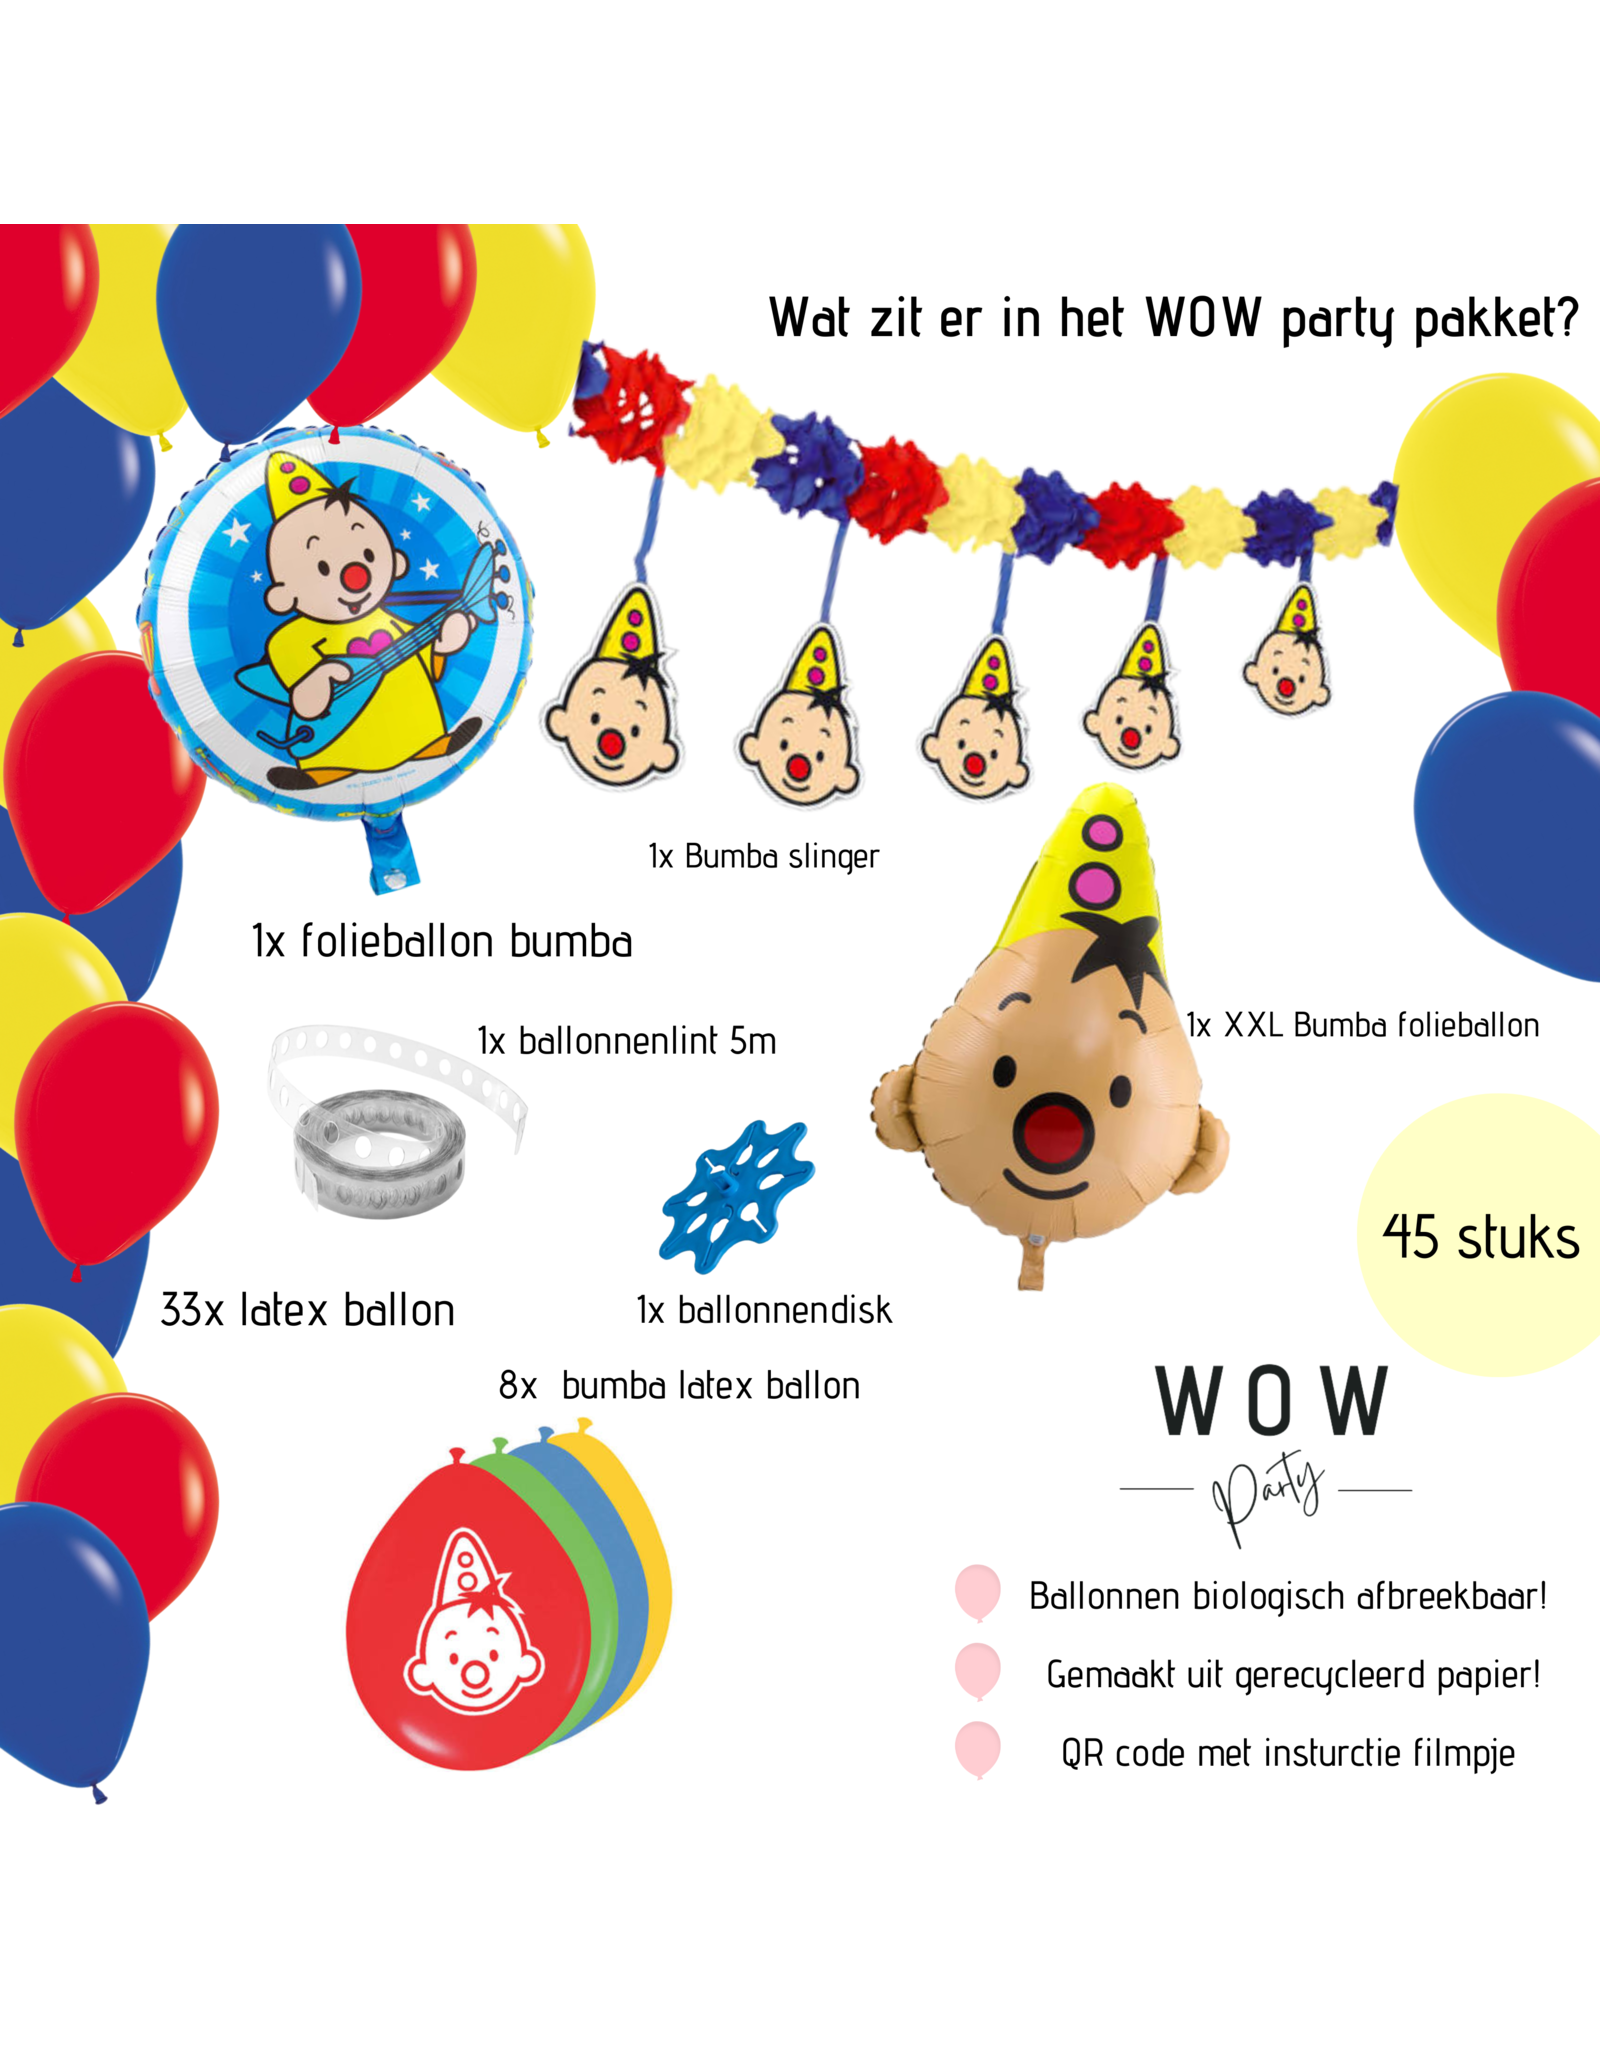 WOW partypakket: Bumba ballonnen